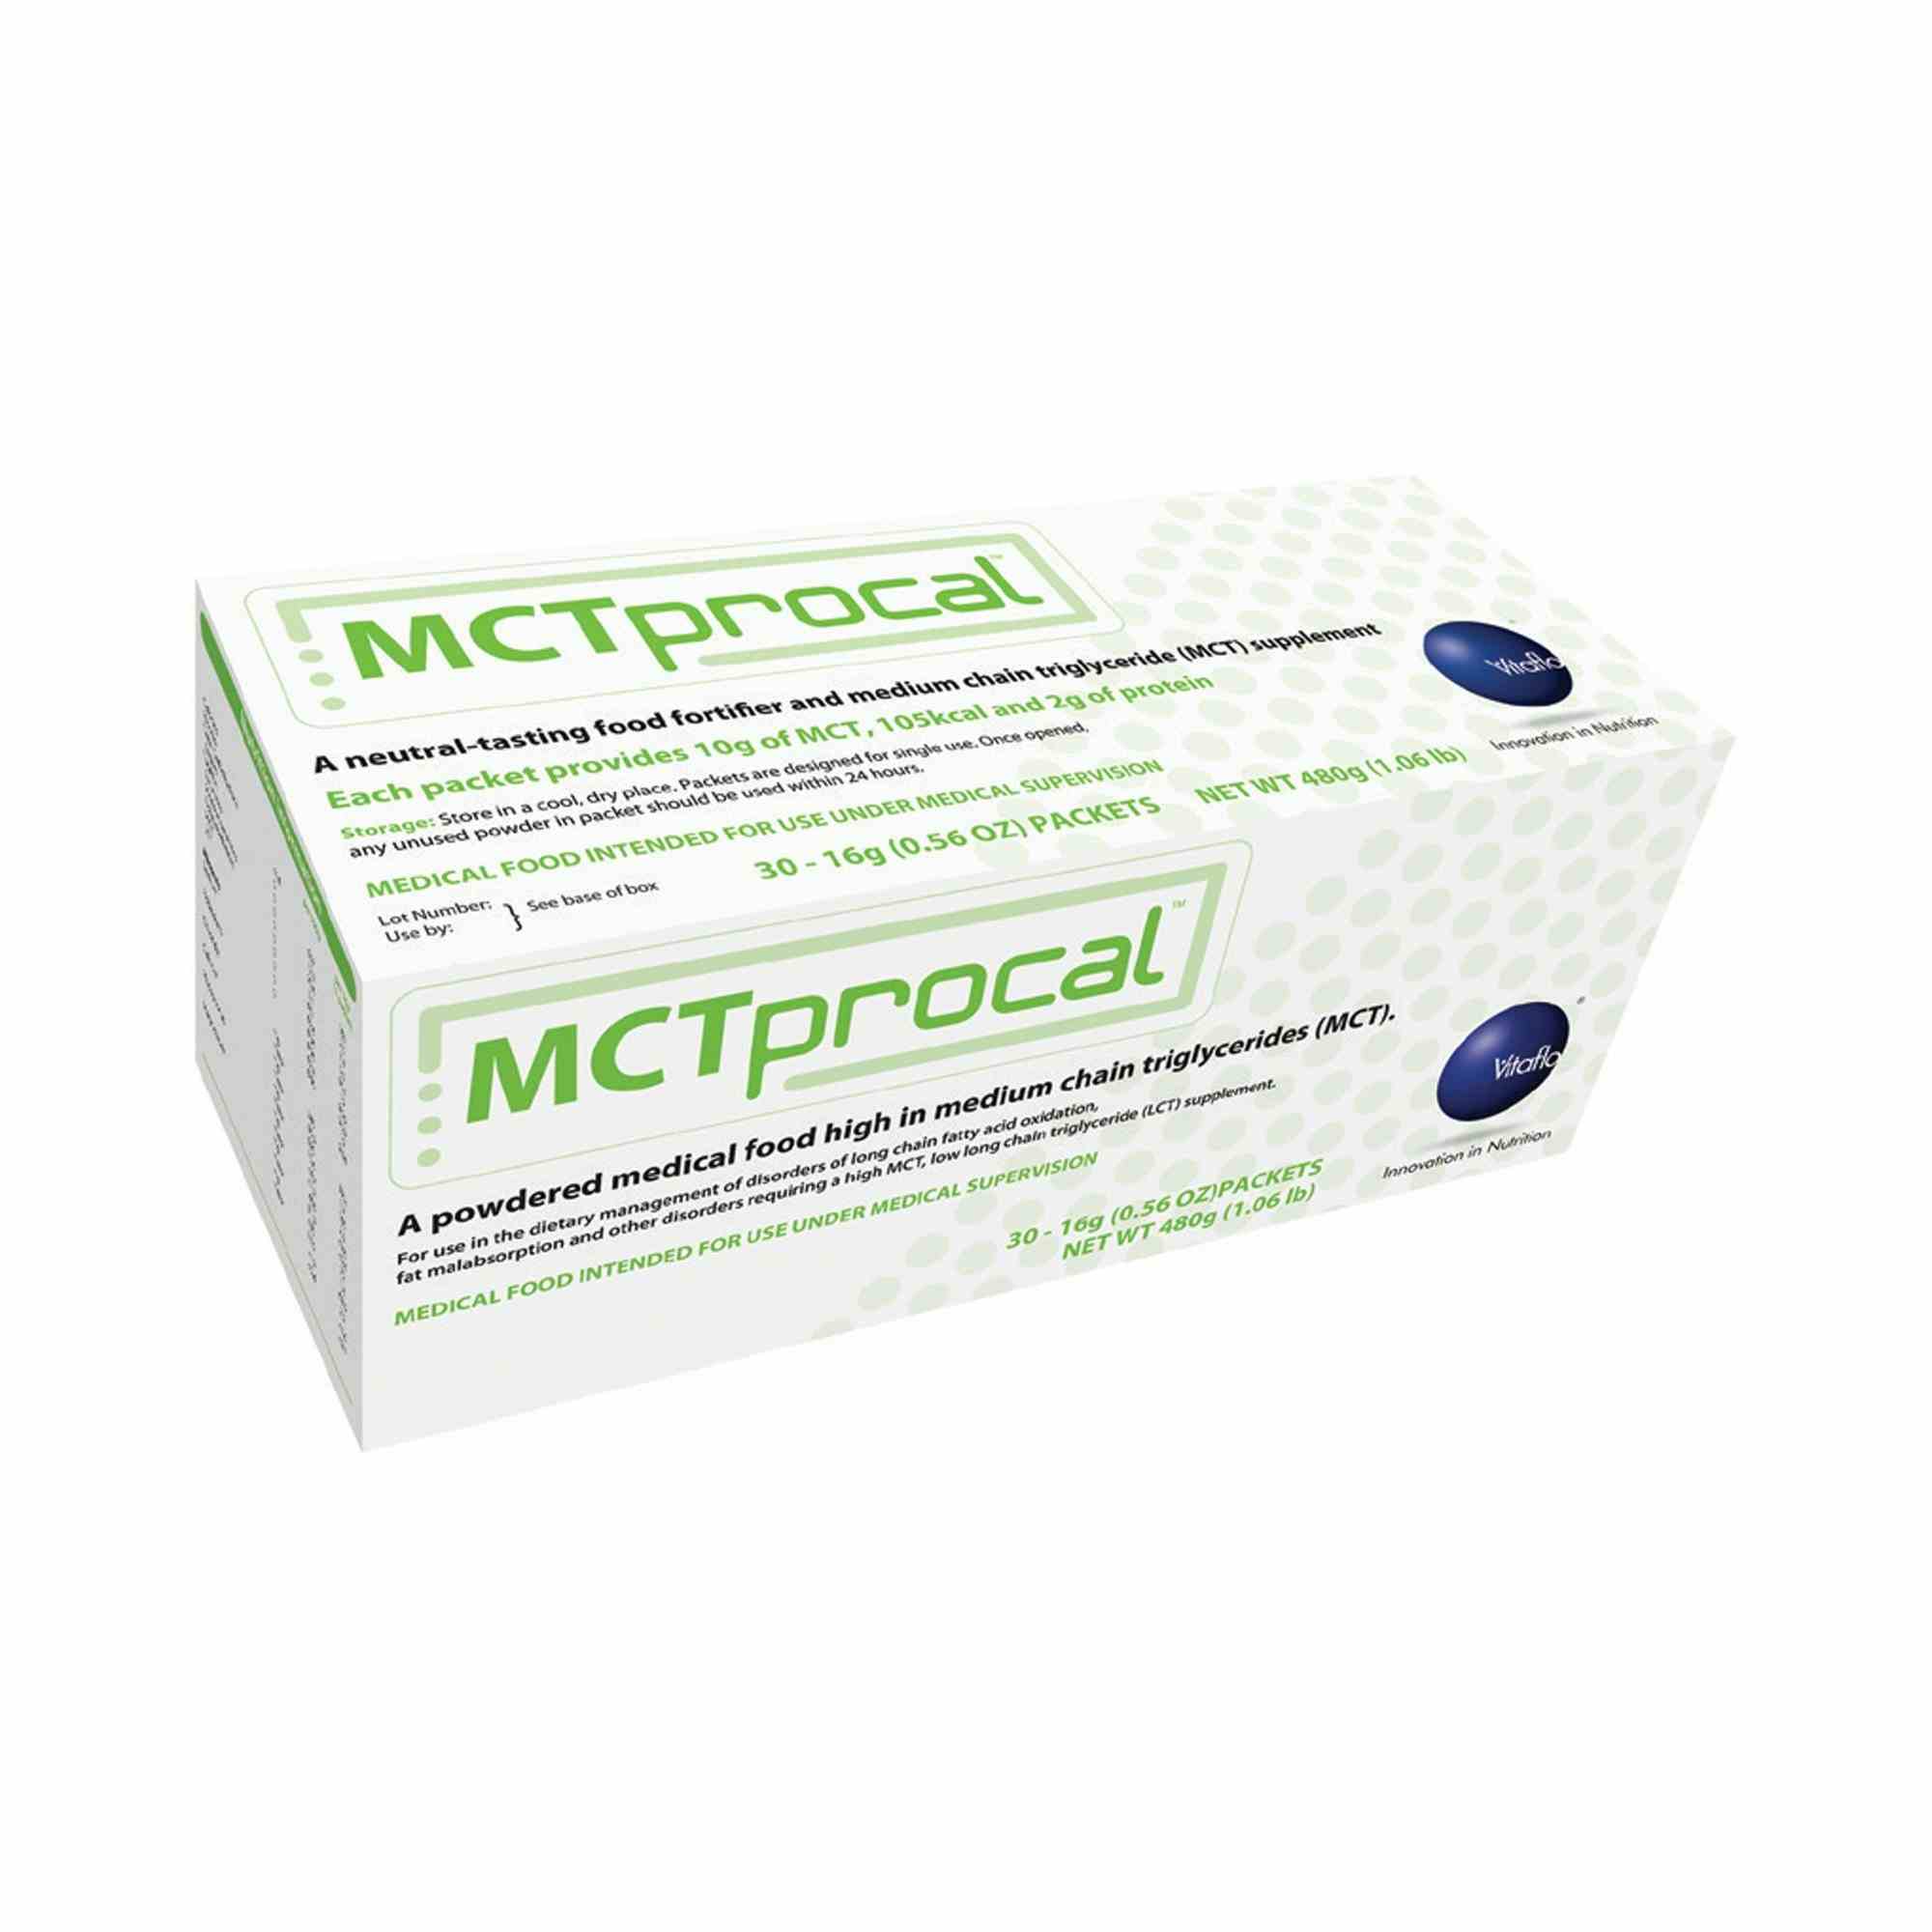 MCTprocal MCT Oral Supplement, Orange Flavor , 16 Grams, 50236, Box of 30